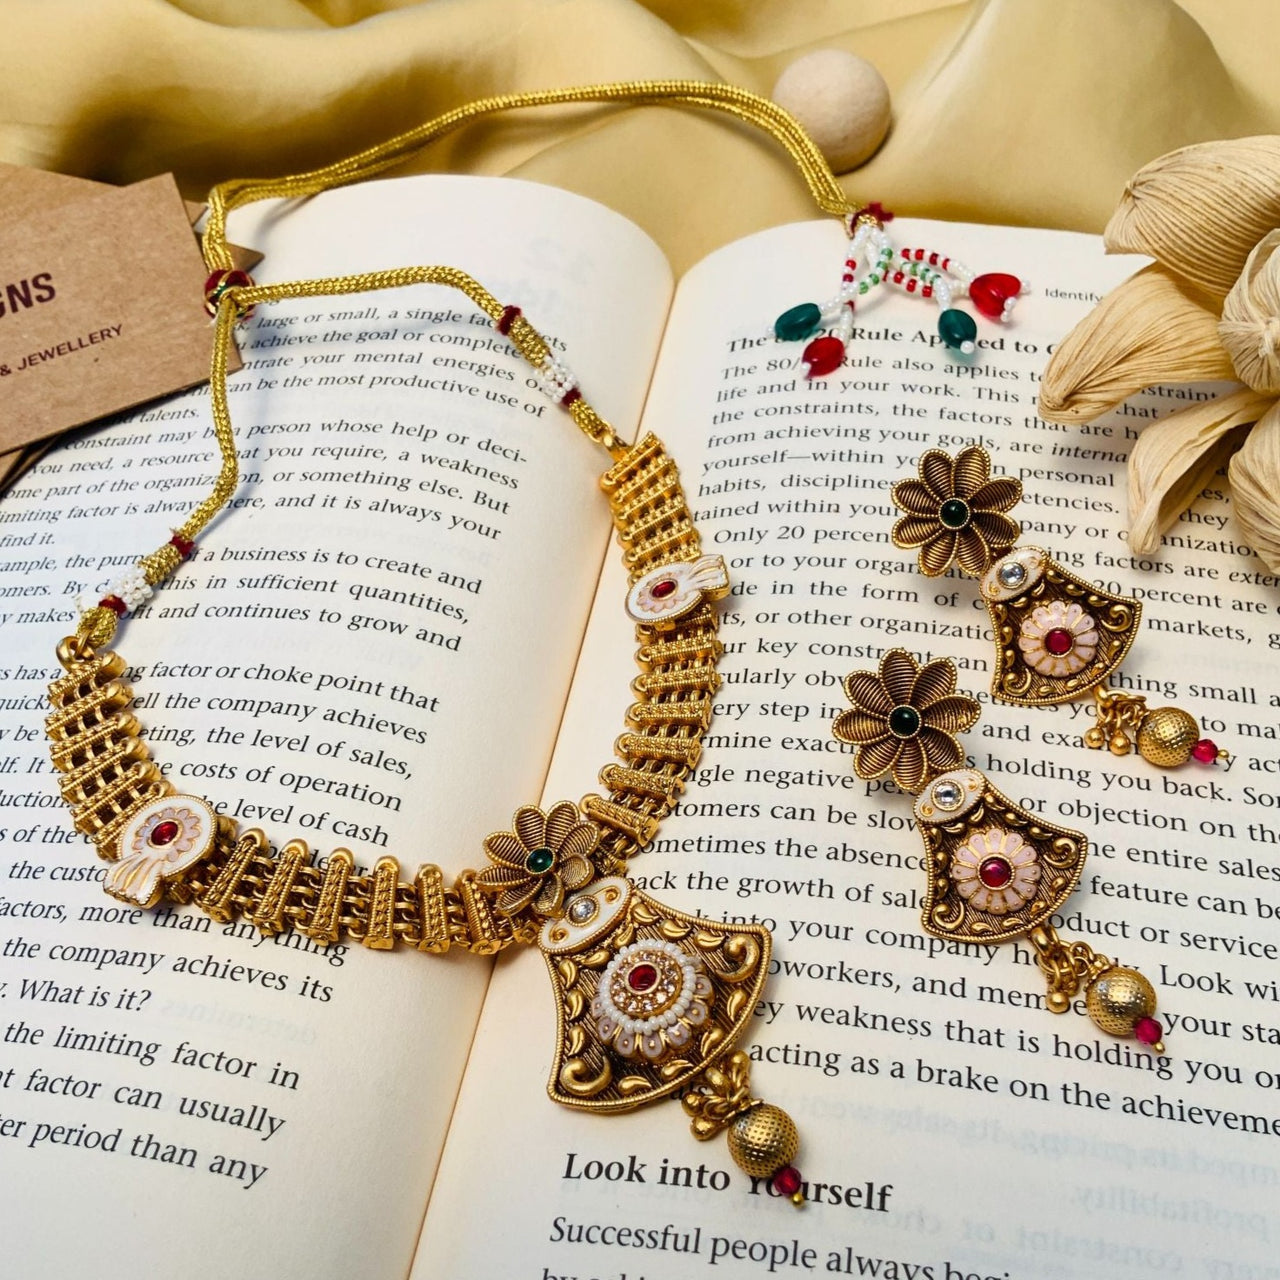 Enchanting Antique Golden Plated Matt Finish Necklace Set - Abdesignsjewellery